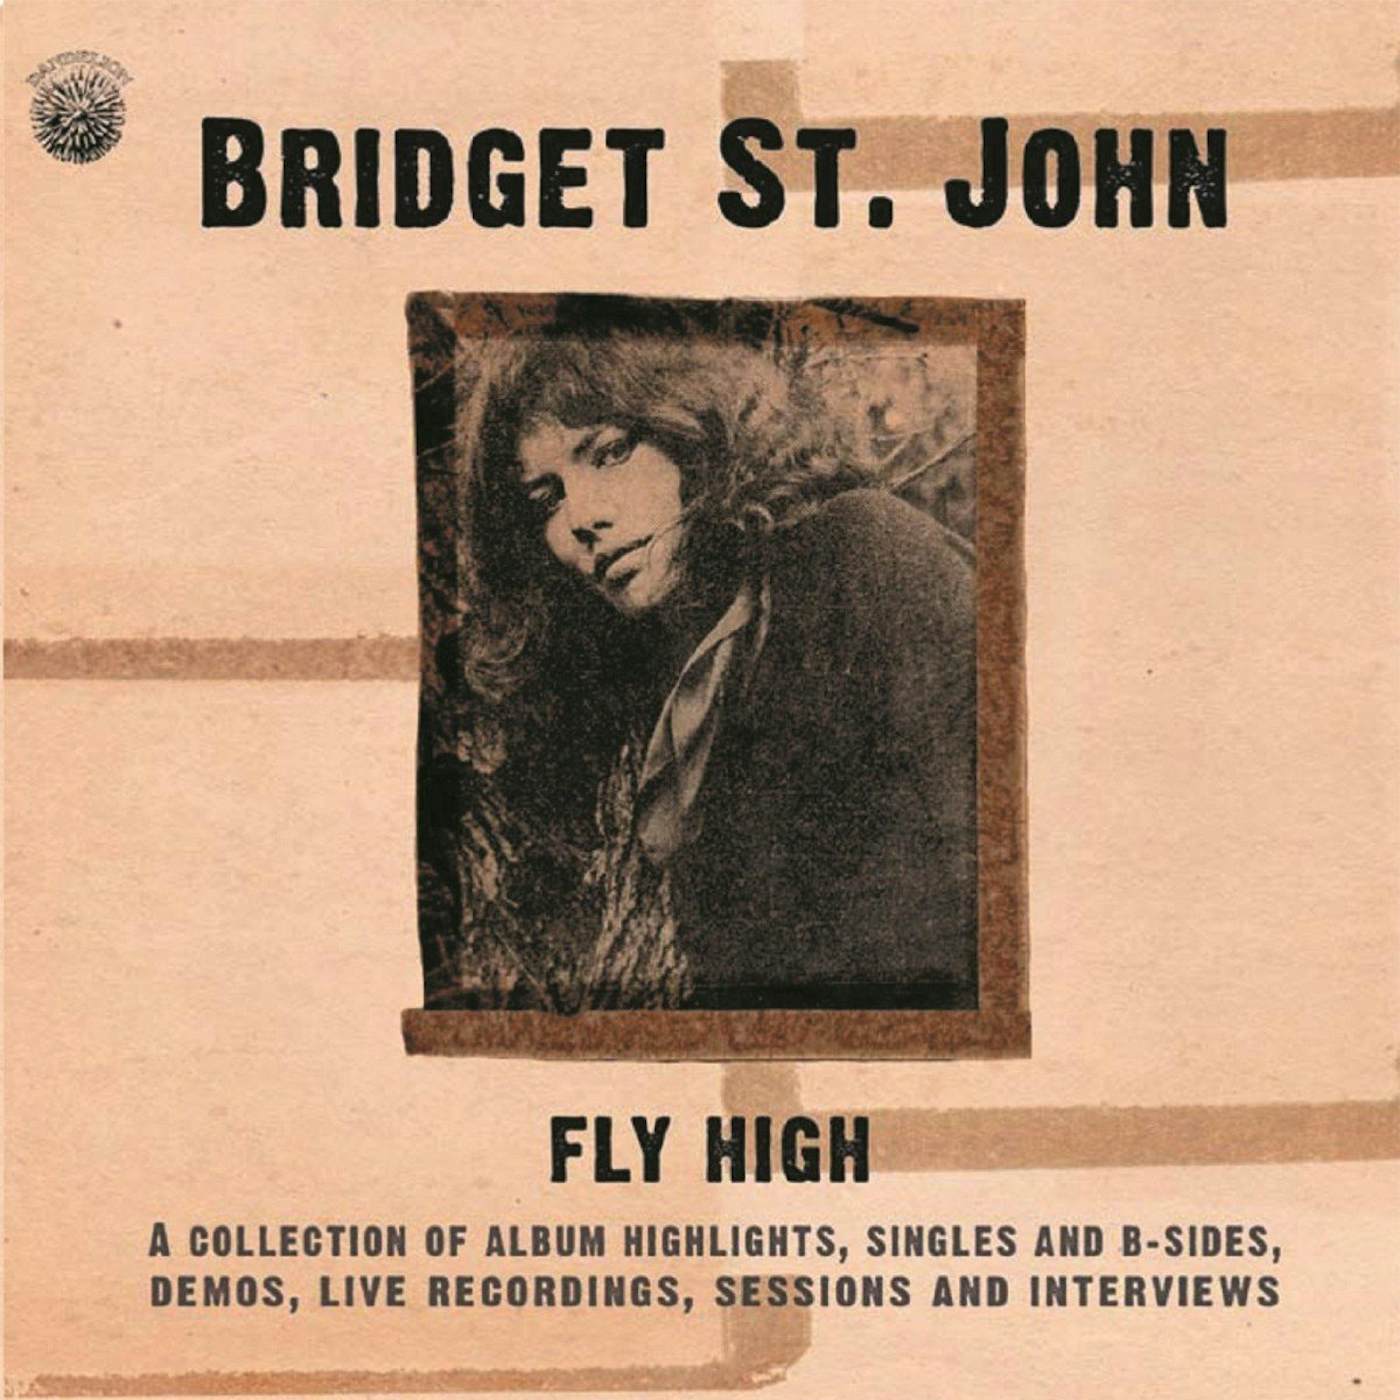 Bridget St John FLY HIGH: COLLECTION OF ALBUM HIGHLIGHTS SINGLES CD